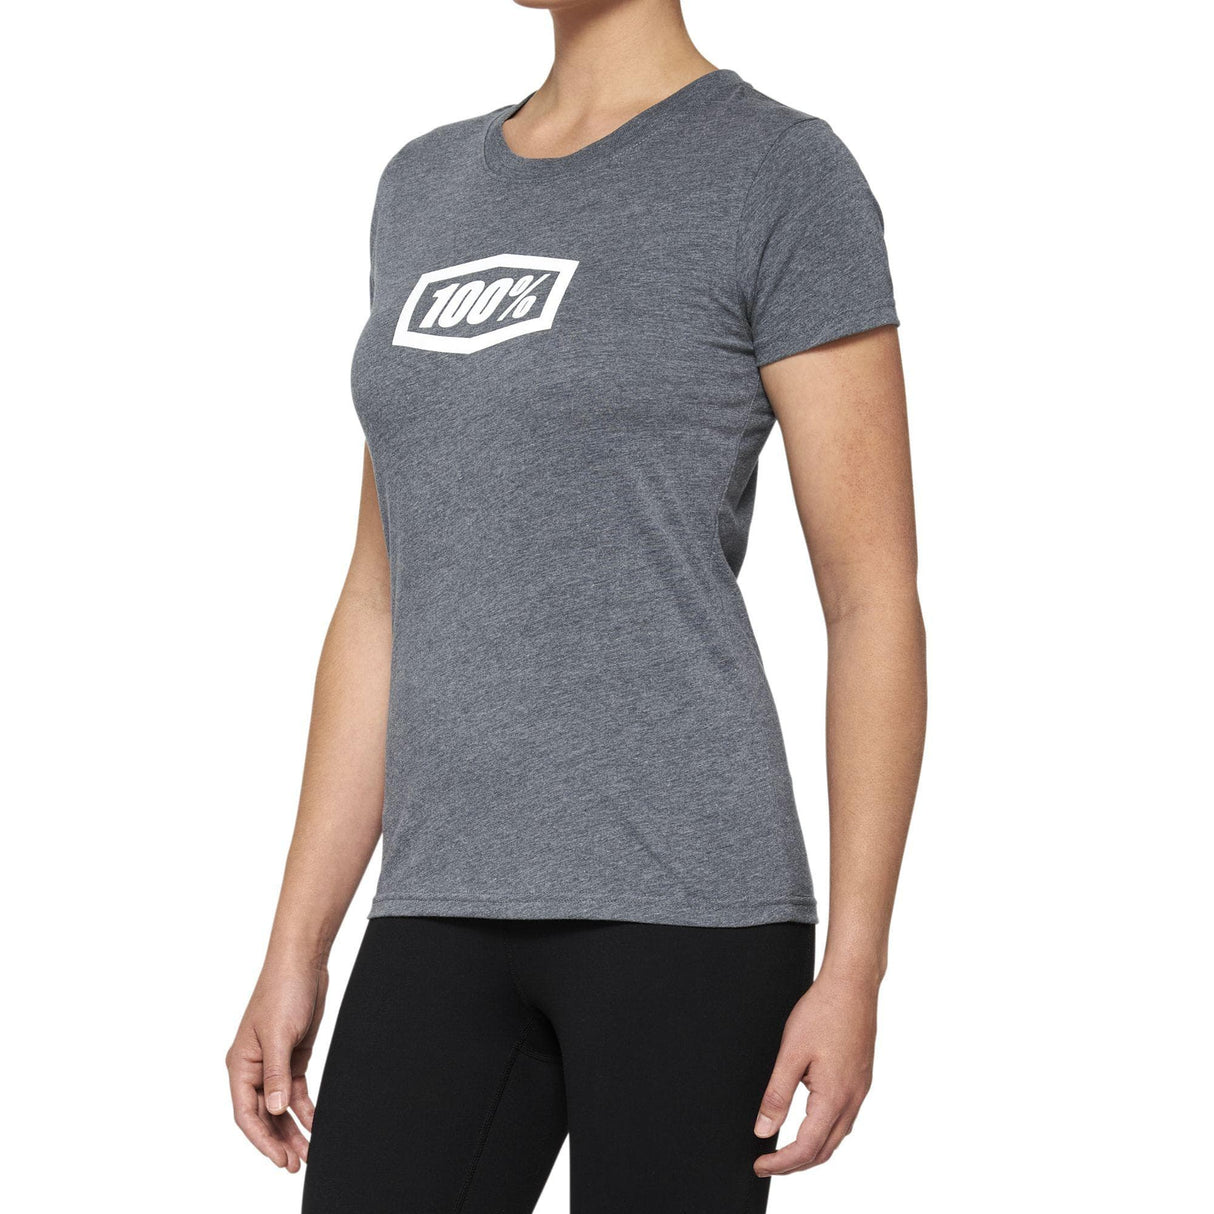 100% ICON Short Sleeve Women's T-Shirt Heather Grey M